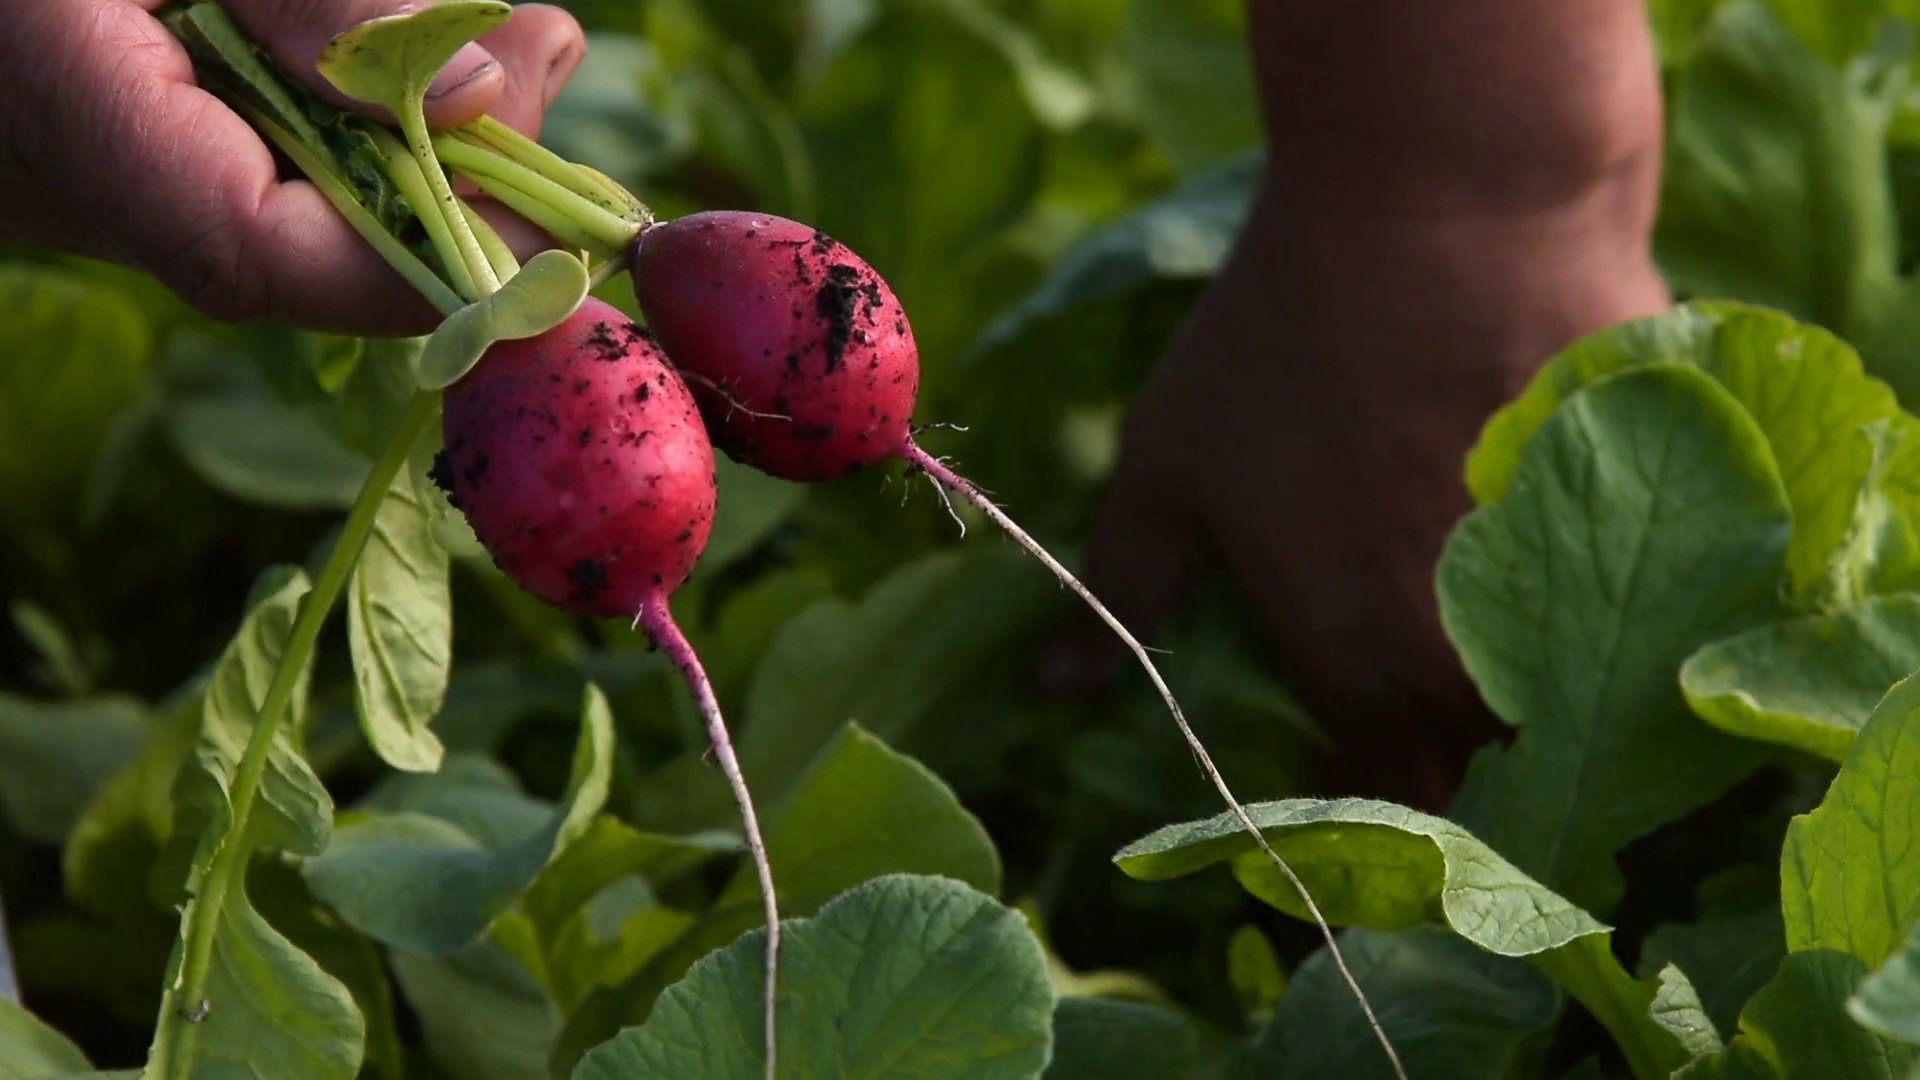 chip-ragsdale-farm-picking-radish-worker